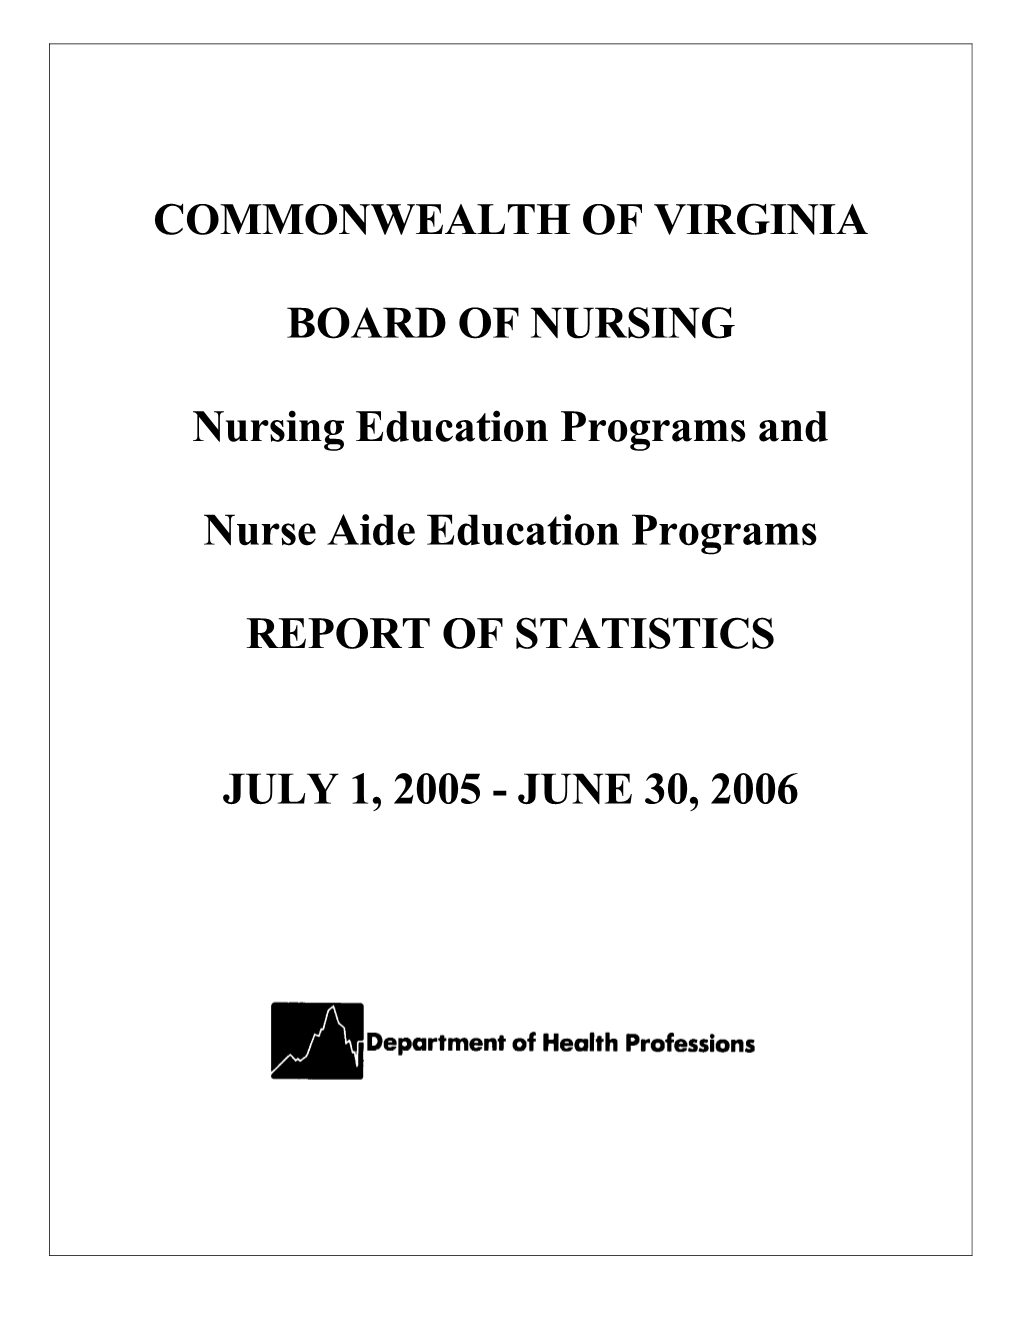 Nursing Report of Statistics 2005-2006